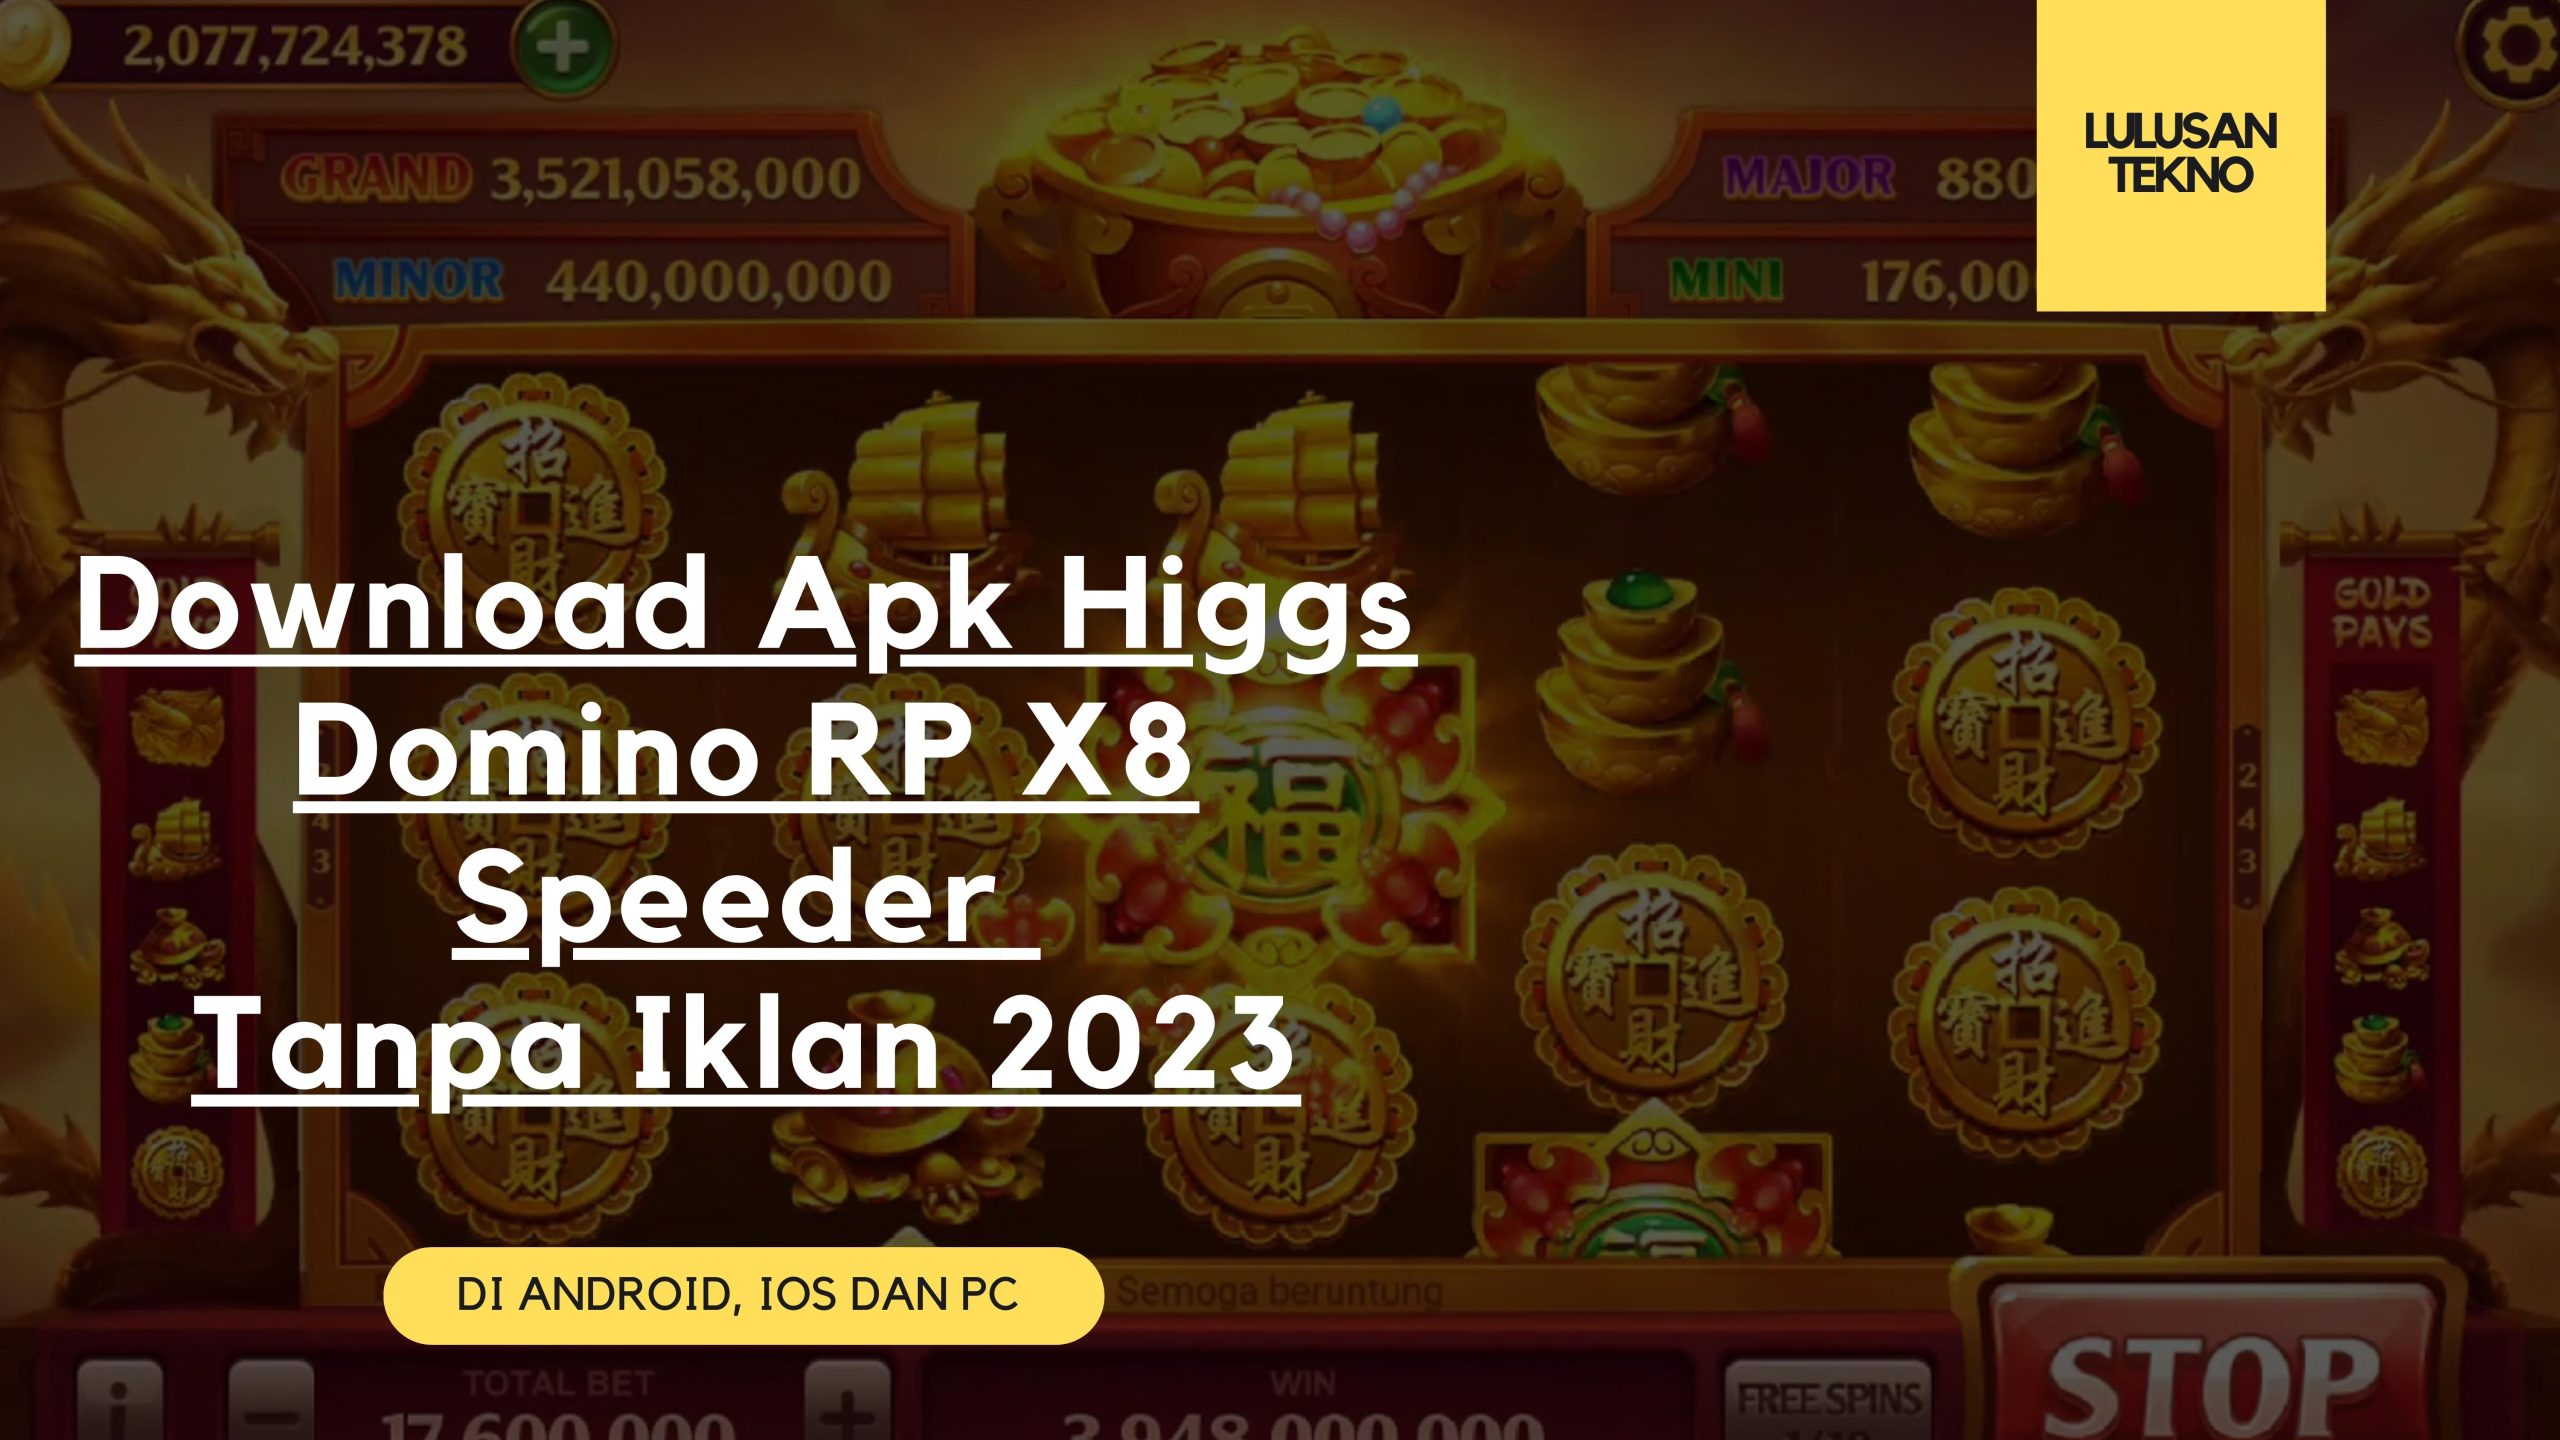 Download Apk Higgs Domino RP X8 Speeder Tanpa Iklan 2023